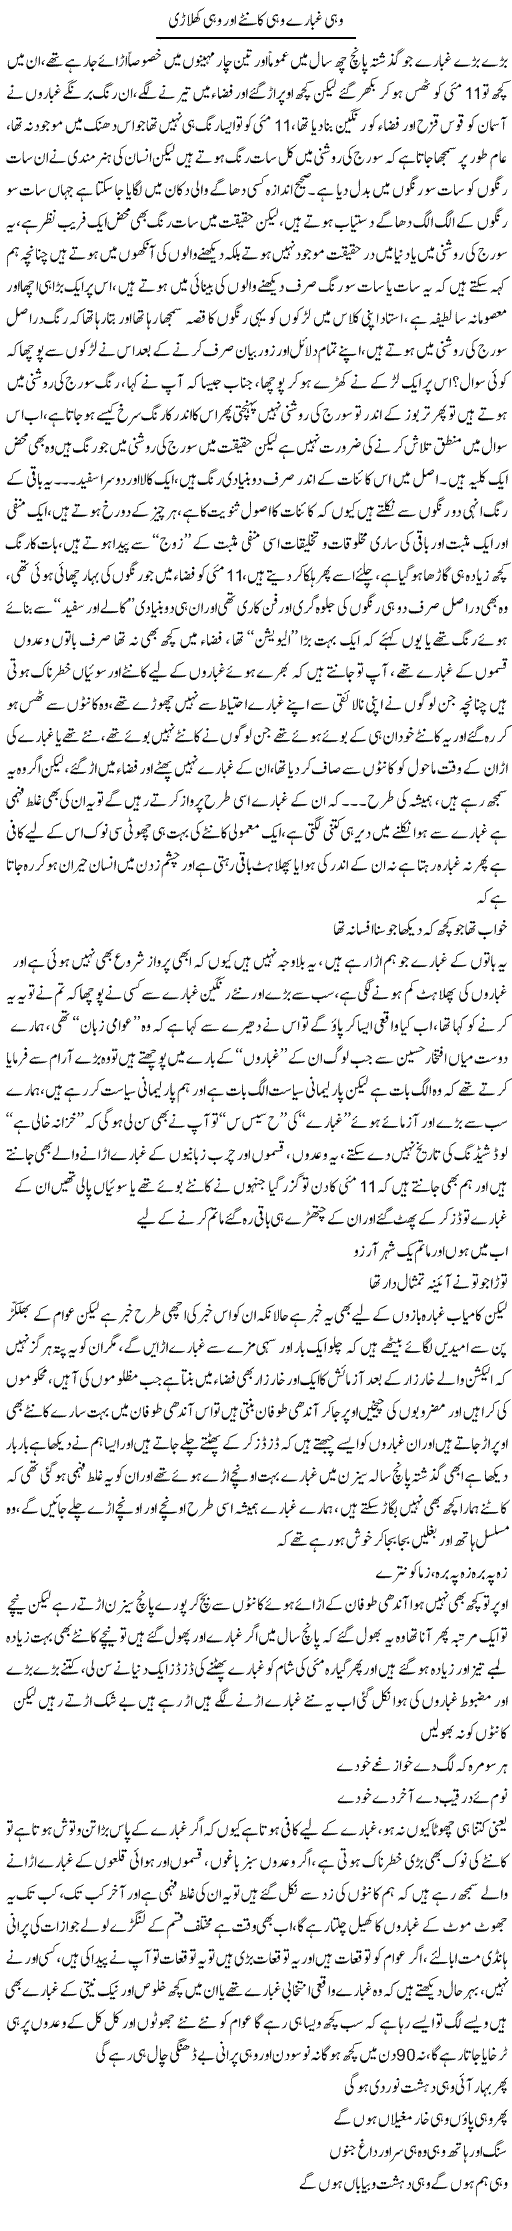 Wohi Kaante Wohi Ghubare Wohi Khilari | Saad Ullah Jan Barq | Daily Urdu Columns